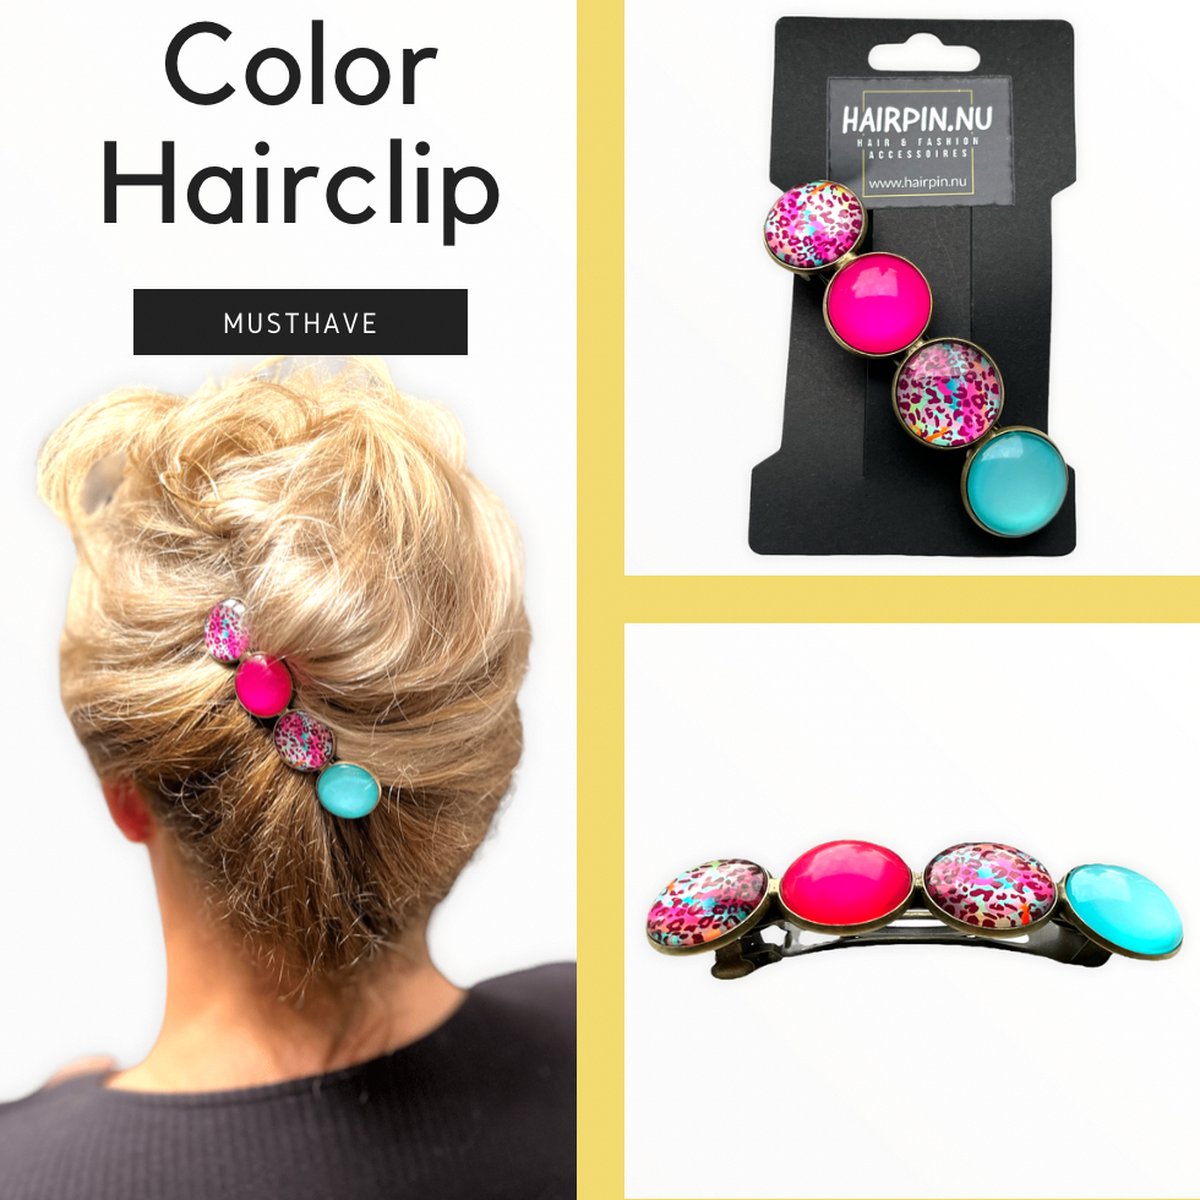 Hairpin.nu Haarspeld cabochon hairclip roze blauw ptint haarmode